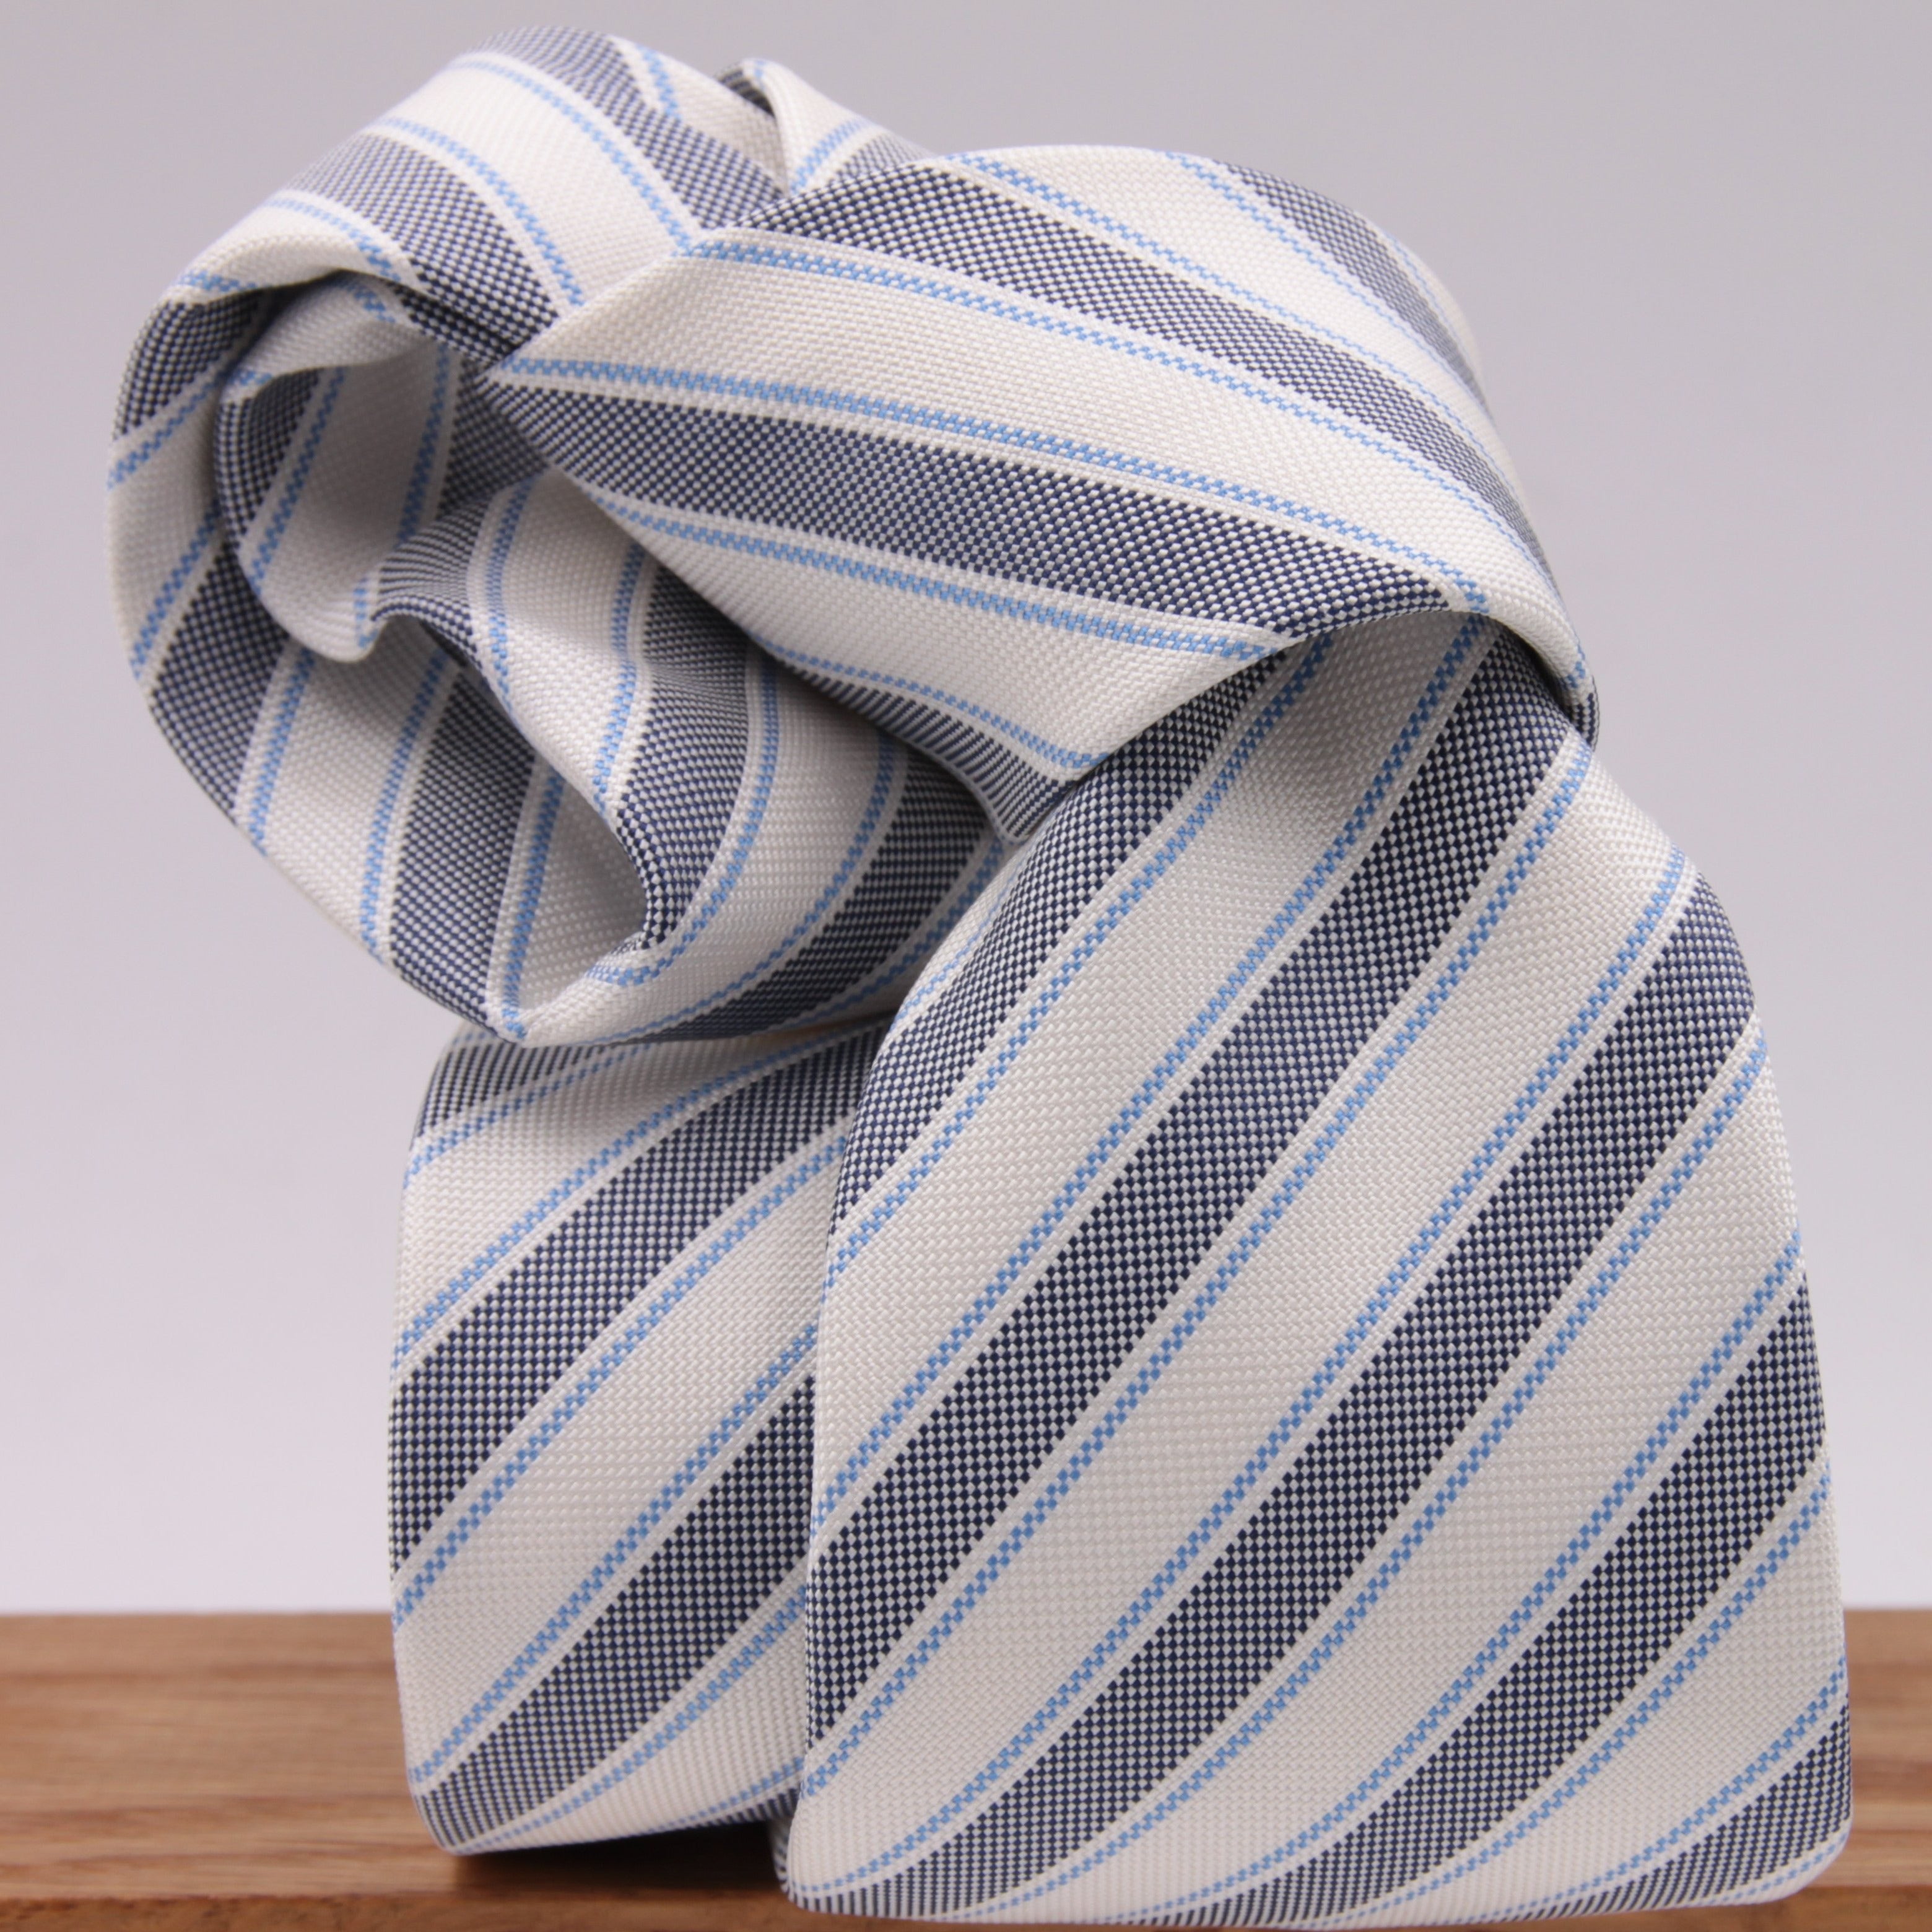 Drake's for Cruciani e Bella 100% Jacquard Silk Tipped Dark Blue, Light Blue and White stripe tie Handmade in London, England 8 cm x 150 cm #5266